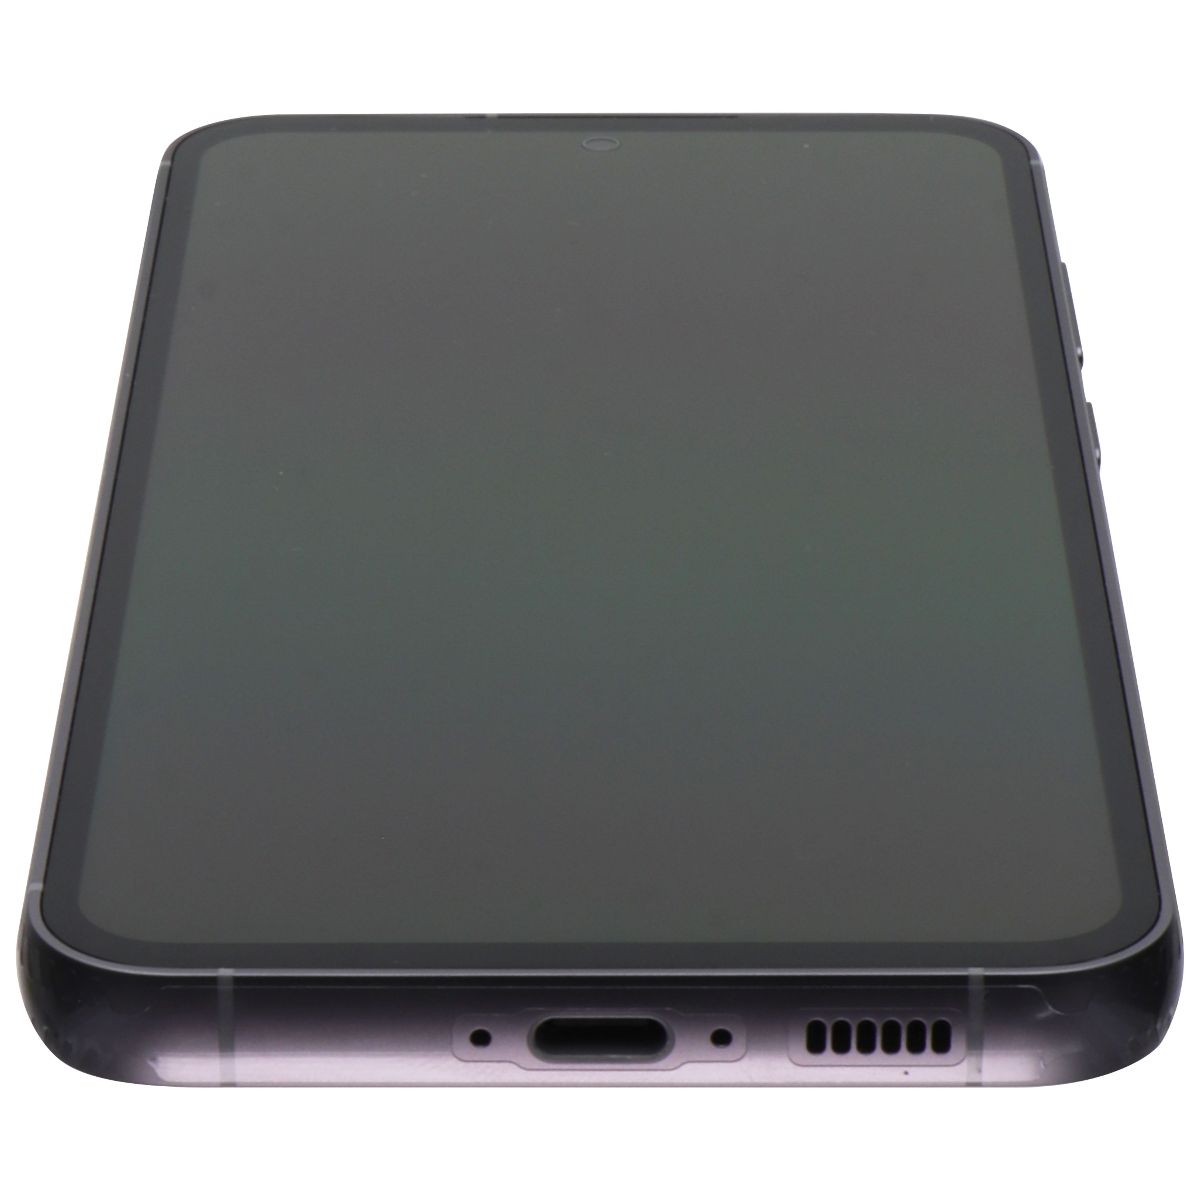 Samsung Galaxy S23 FE (6.4-in) Smartphone (SM-S711U) Verizon -128GB/Graphite Cell Phones & Smartphones Samsung    - Simple Cell Bulk Wholesale Pricing - USA Seller